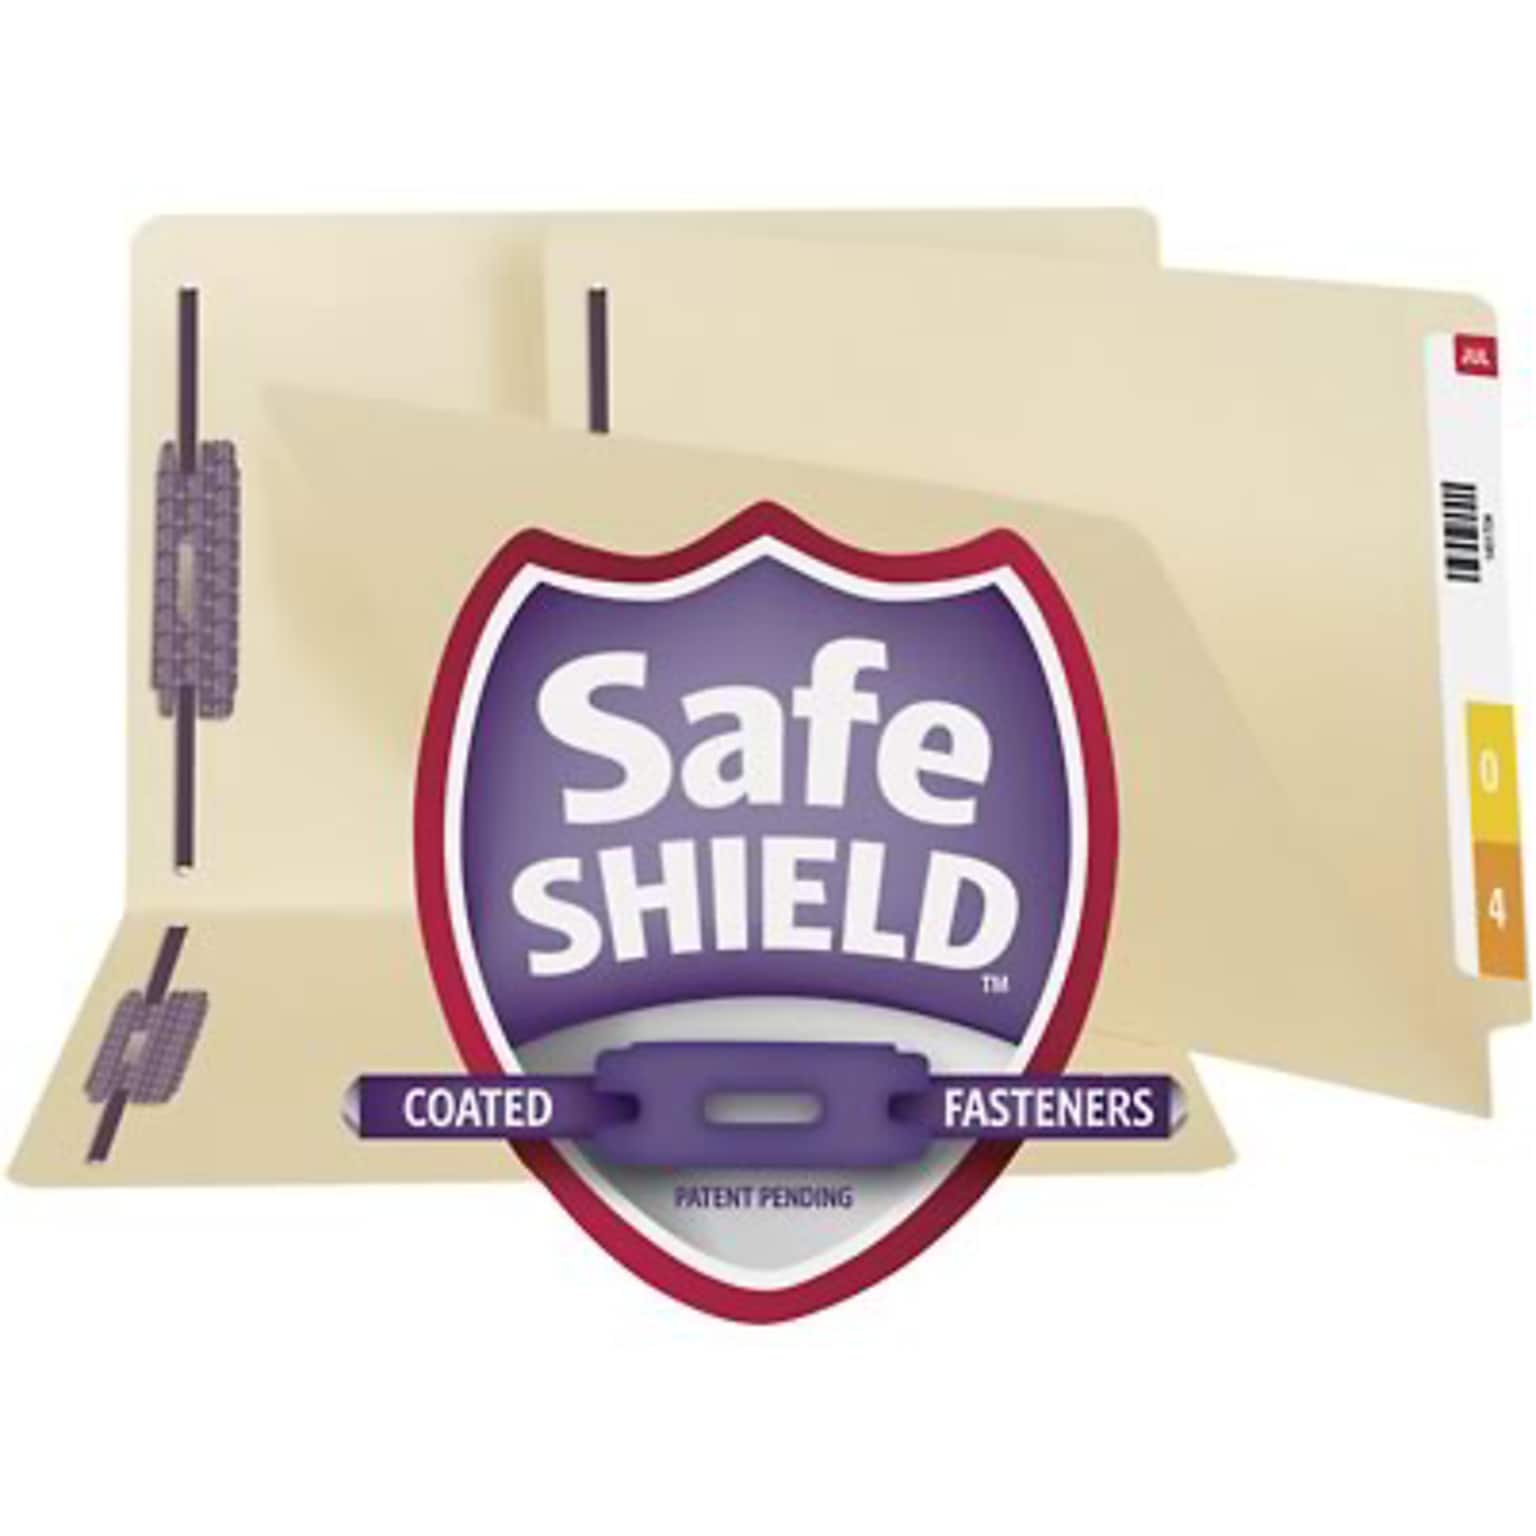 Smead SafeSHIELD Reinforced End-Tab File Folders, 2-Fasteners, Letter, Manila, 50/Bx (34117)